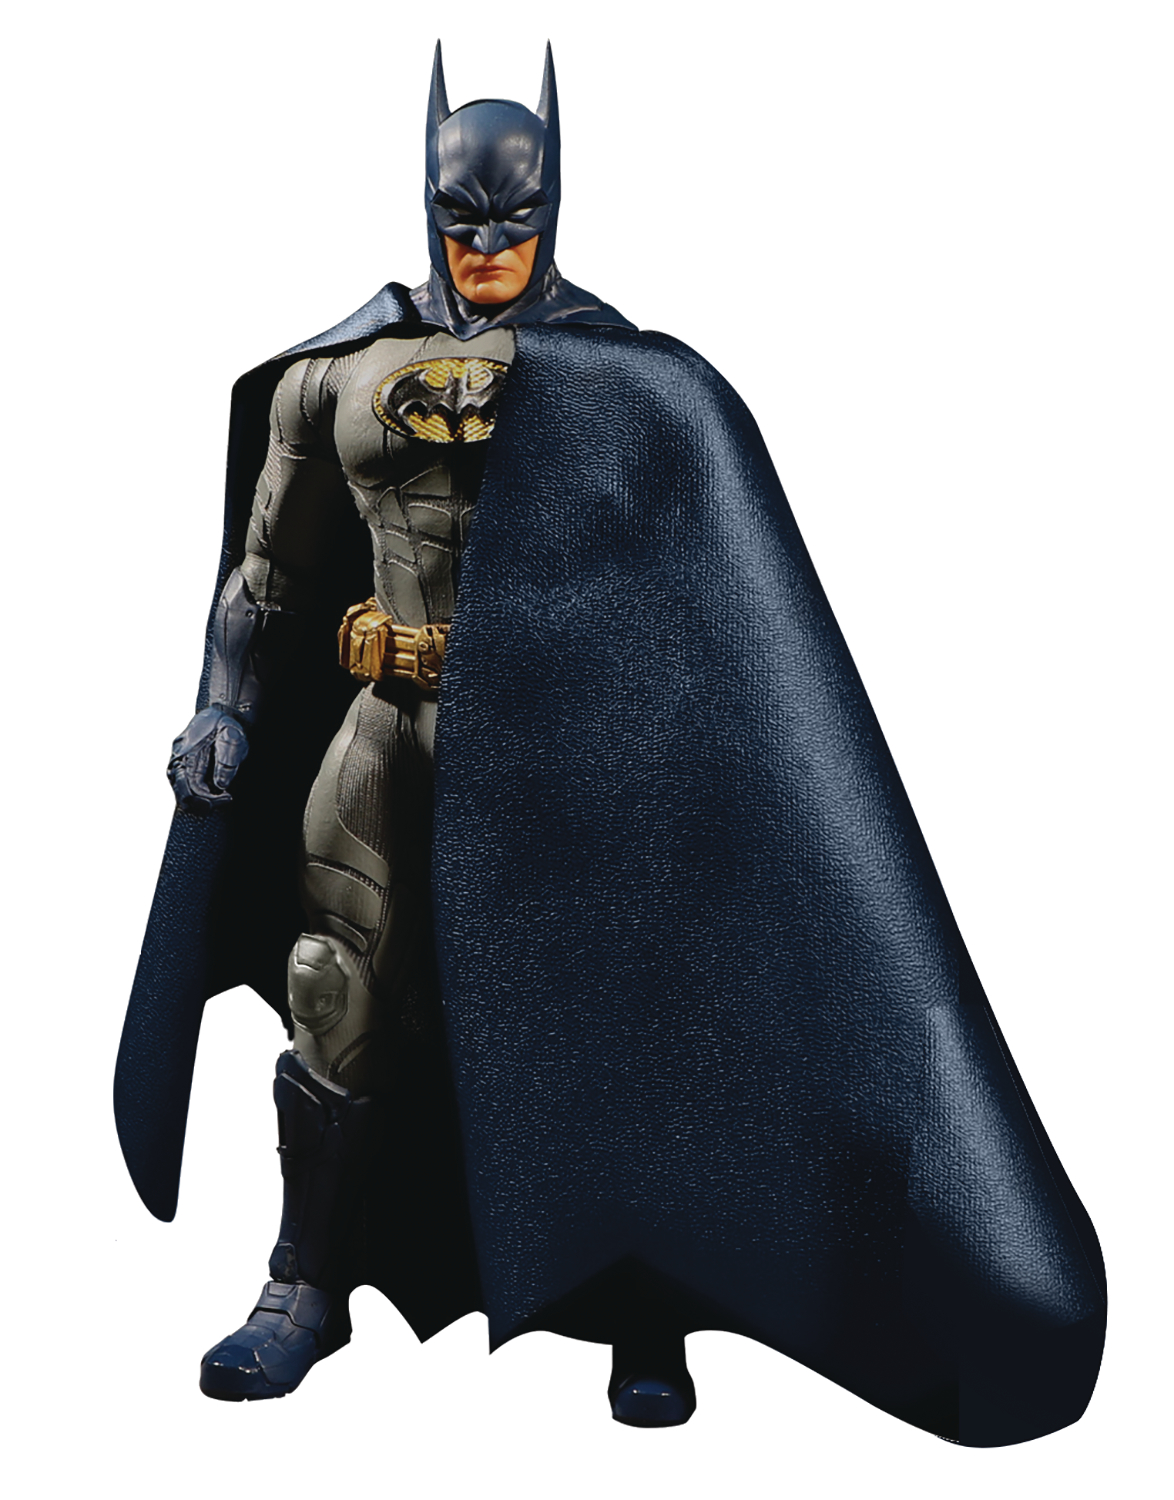 mezco batman sovereign knight px